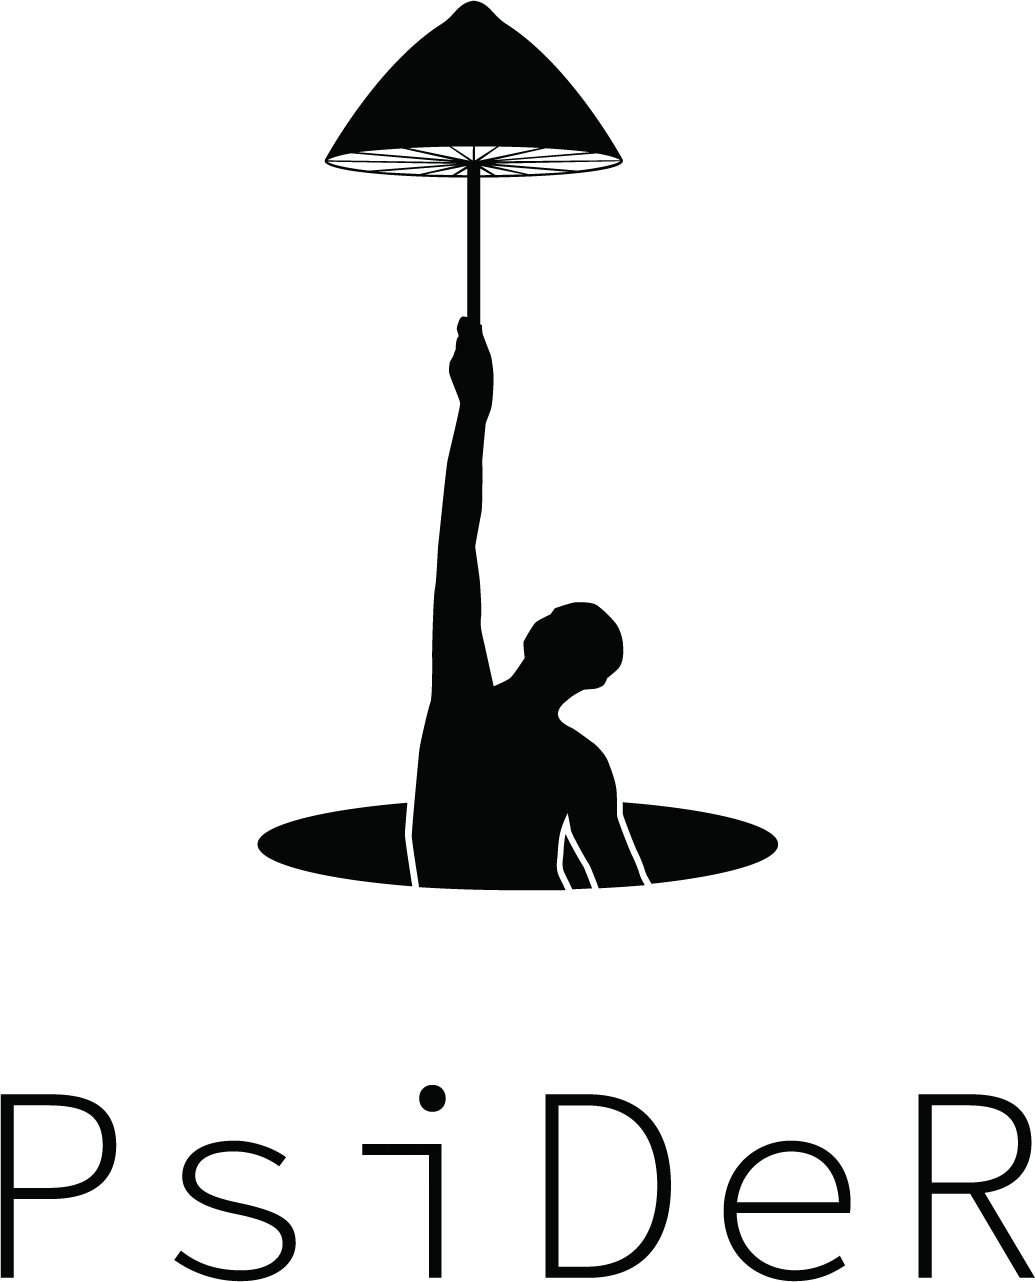 PsiDeR_logo (1)[24]